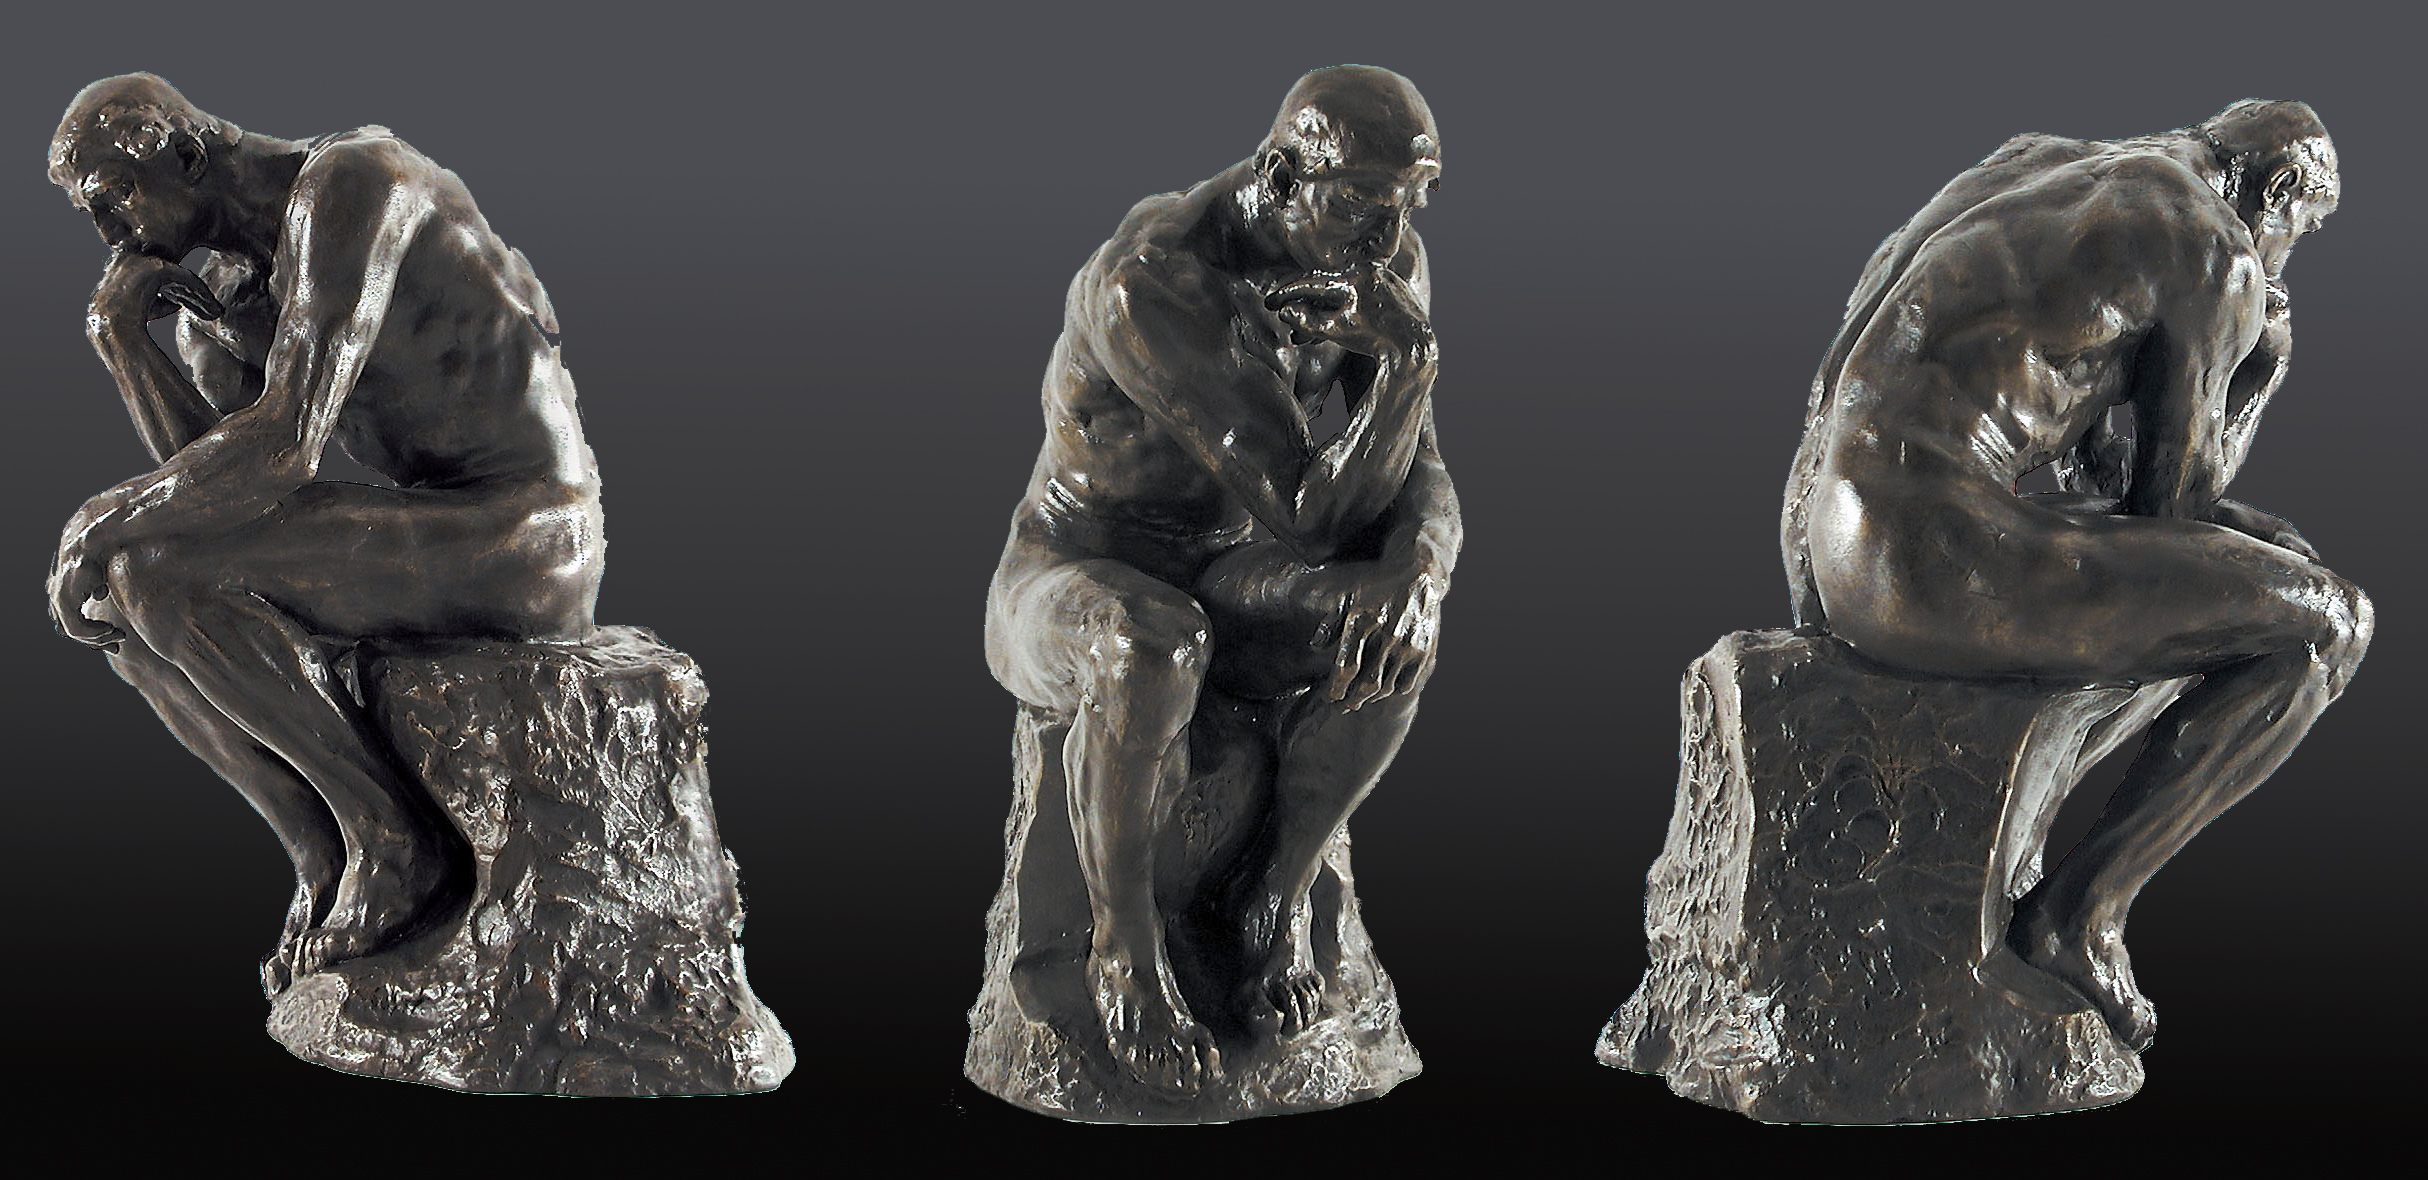 Pensador Rodin